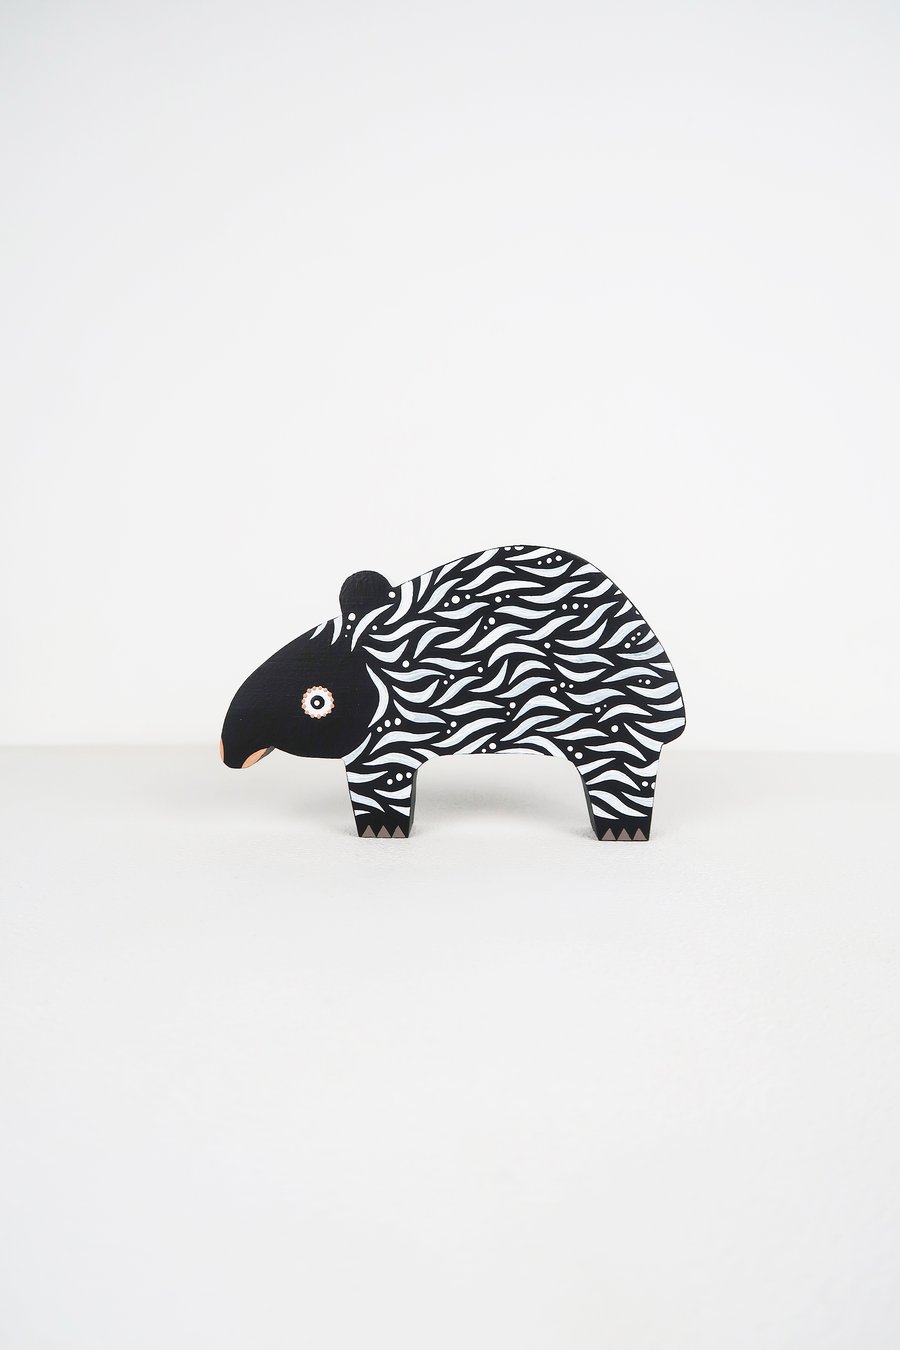 Malayan tapir wooden ornament, jungle home decor, animal lover gift.